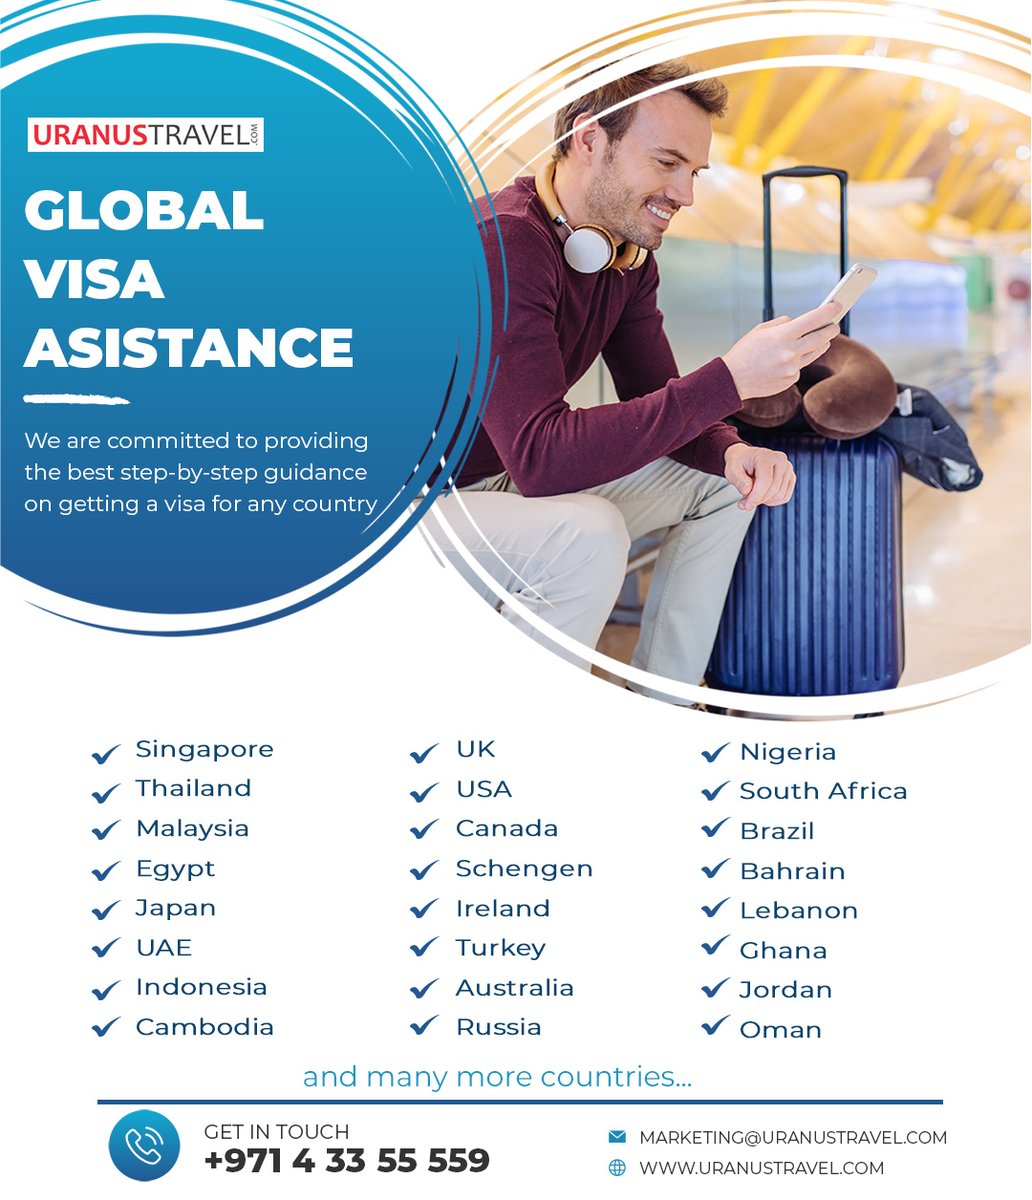 Global Visa Assistance !
We are committed to providing the best step-by-step guidance on getting a visa for any country.

Enquire bit.ly/30nCumK 

#businesstravel #europevisa #egyptvisa #schengenvisa #travel #Holidays #tourism  #uranustravel #usavisa #ghanavisa #dubai